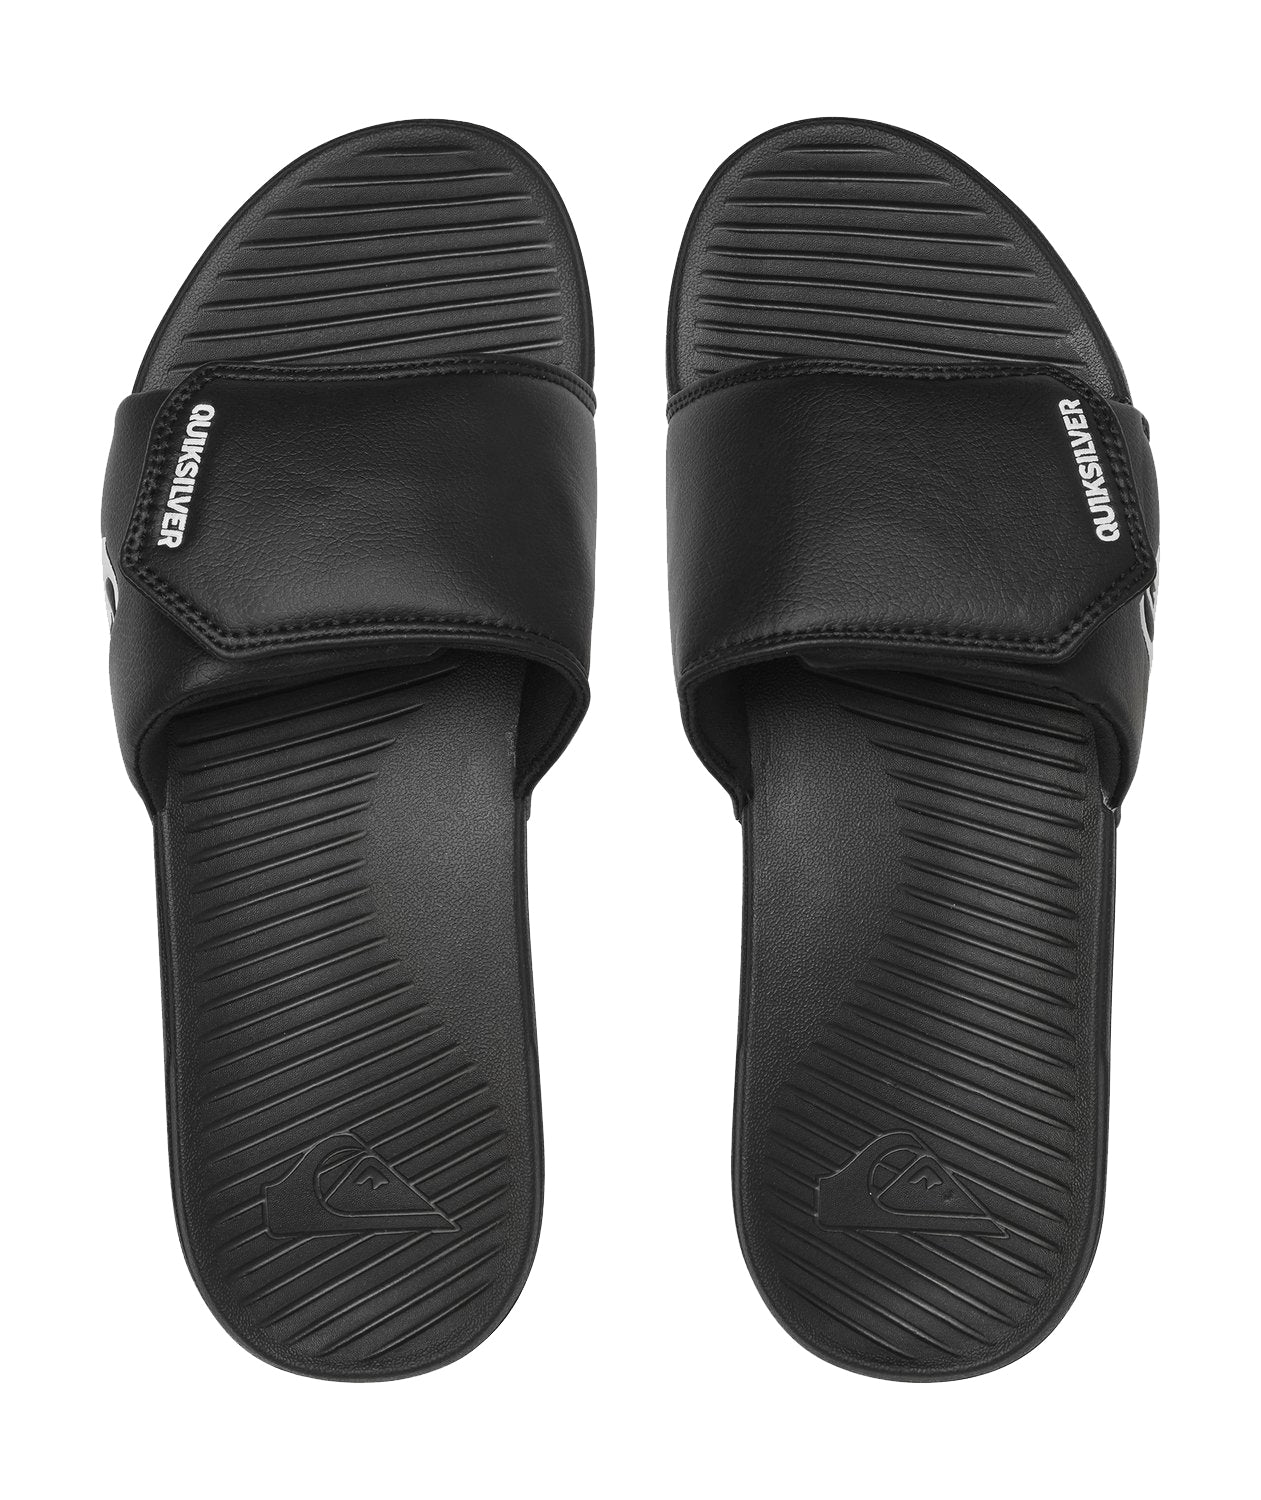 Quiksilver Bright Coast Adjust Mens Sandal XKWK-Black-White-Black 10